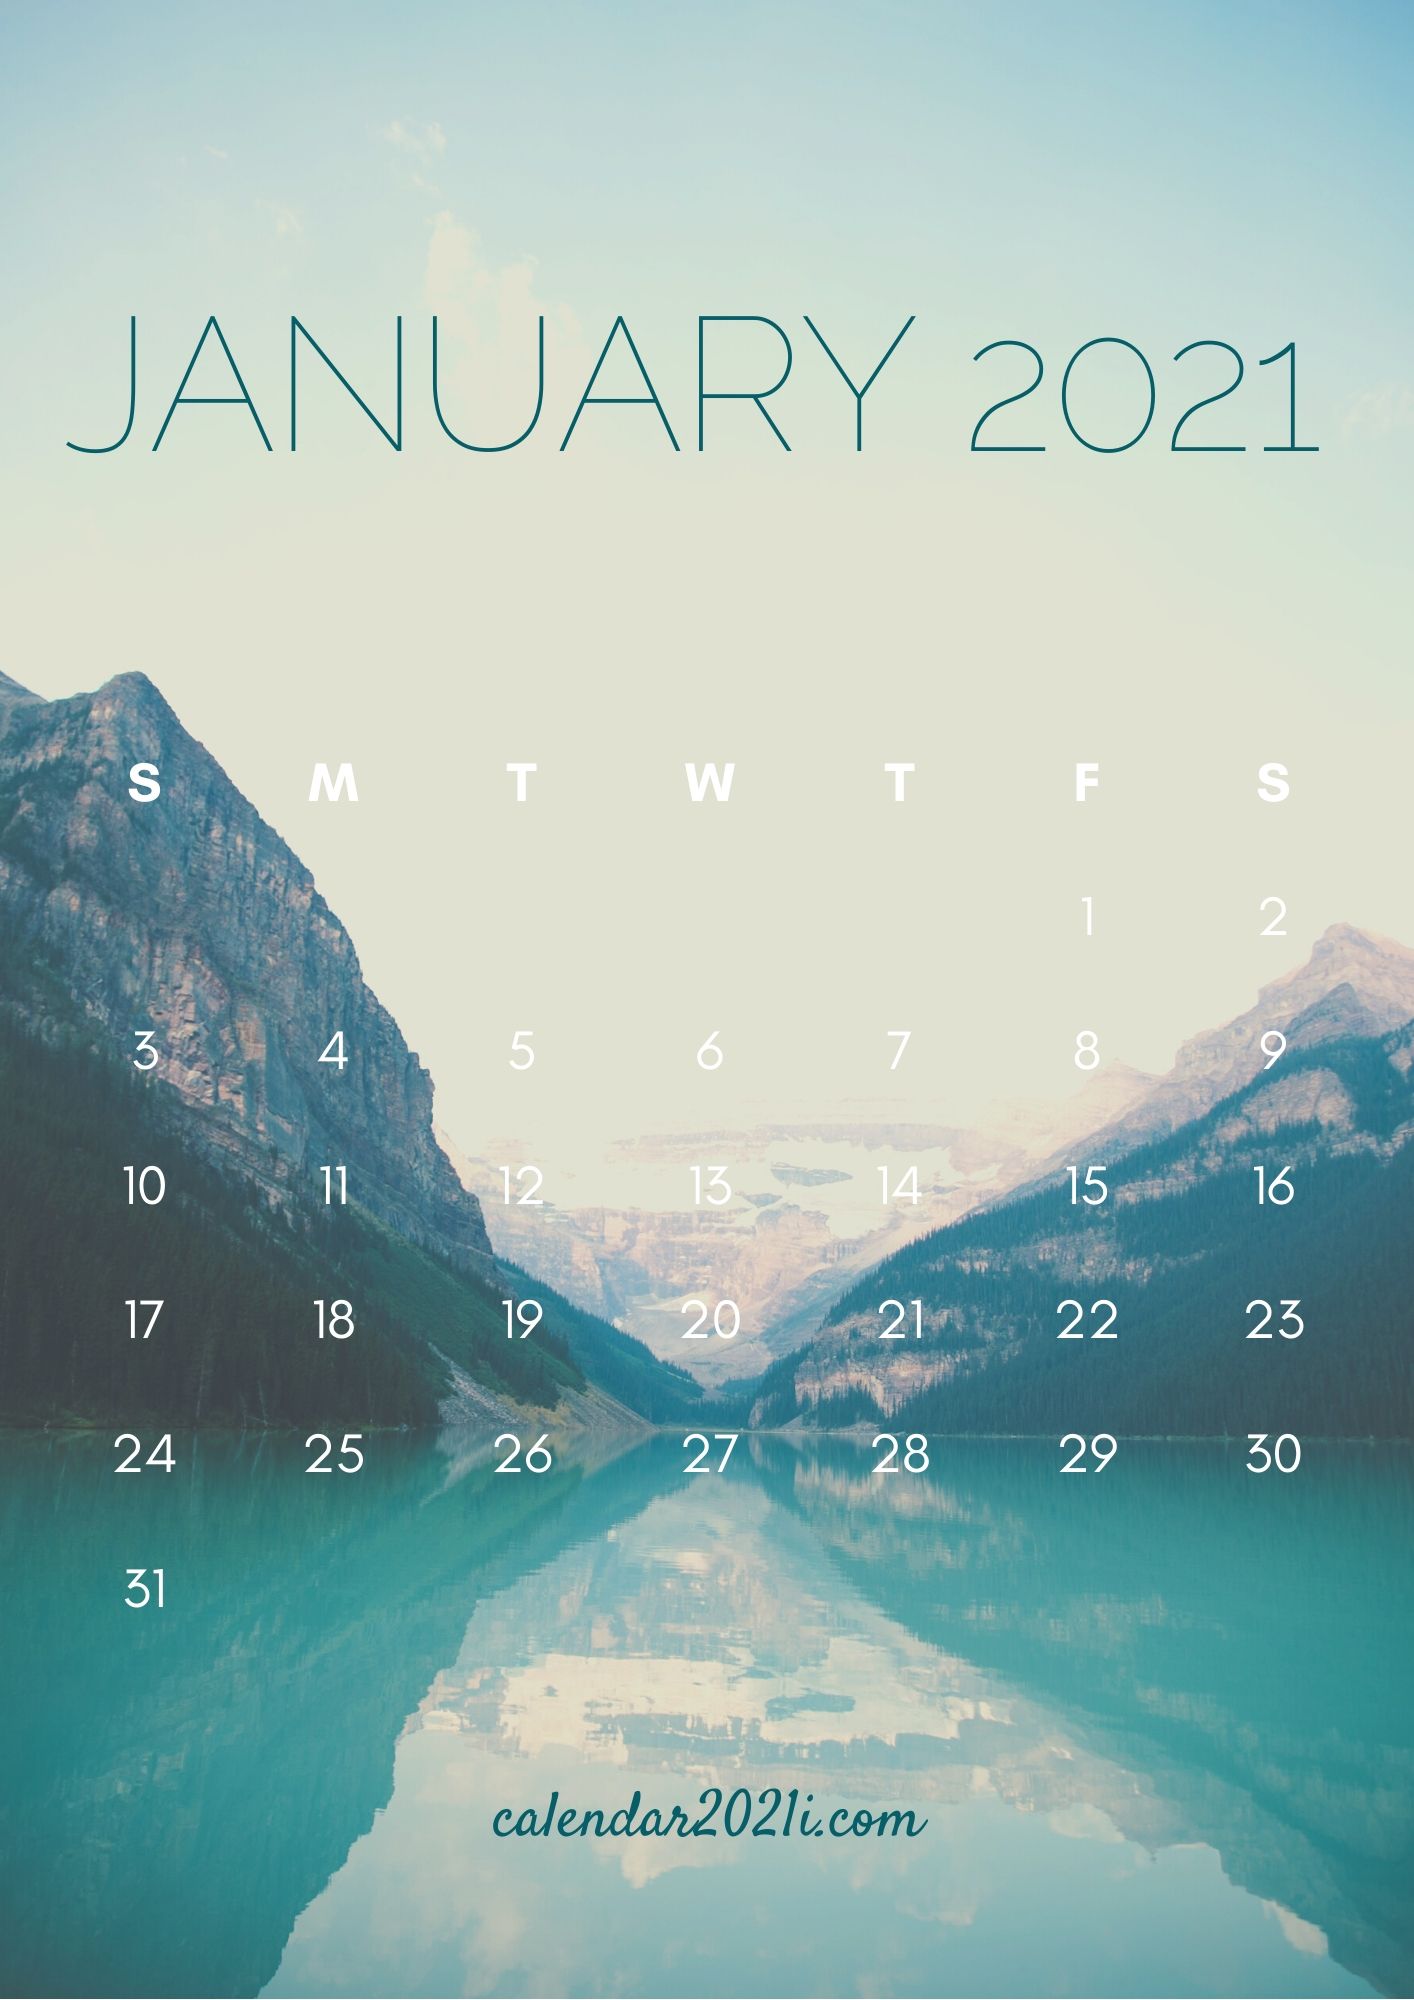 January 2021 iPhone Calendar Wallpaper